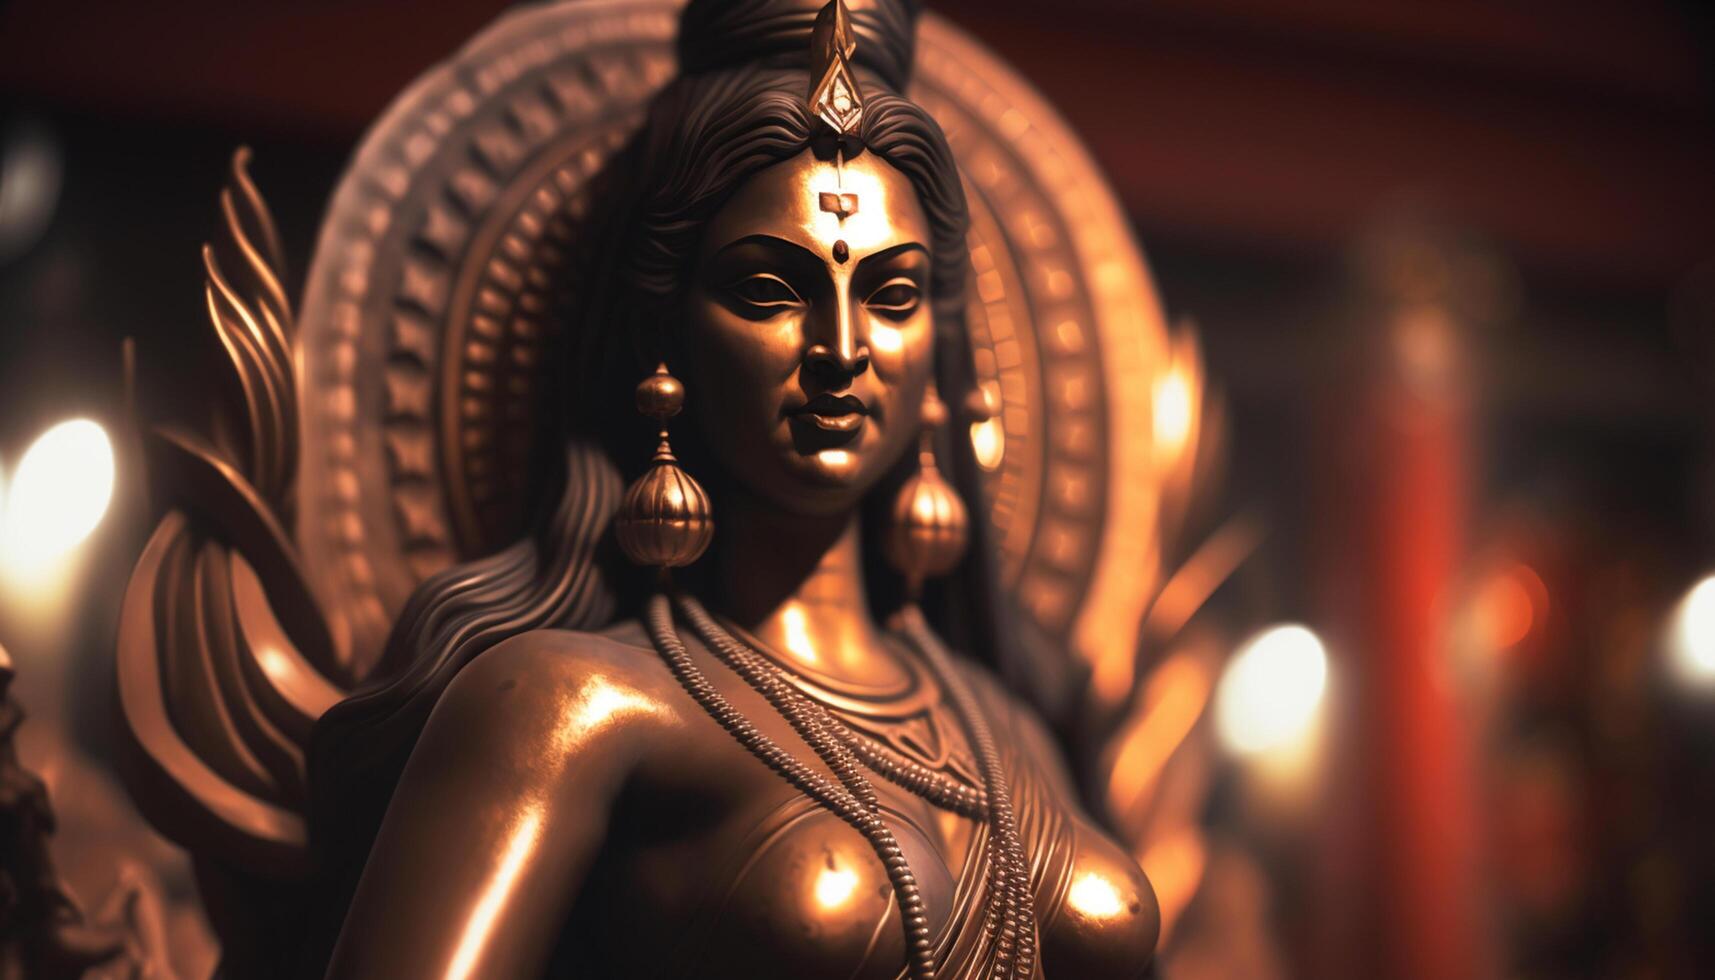 Divine Warrior A Portrait of Durga, the Hindu Goddess of War in Sculpture photo